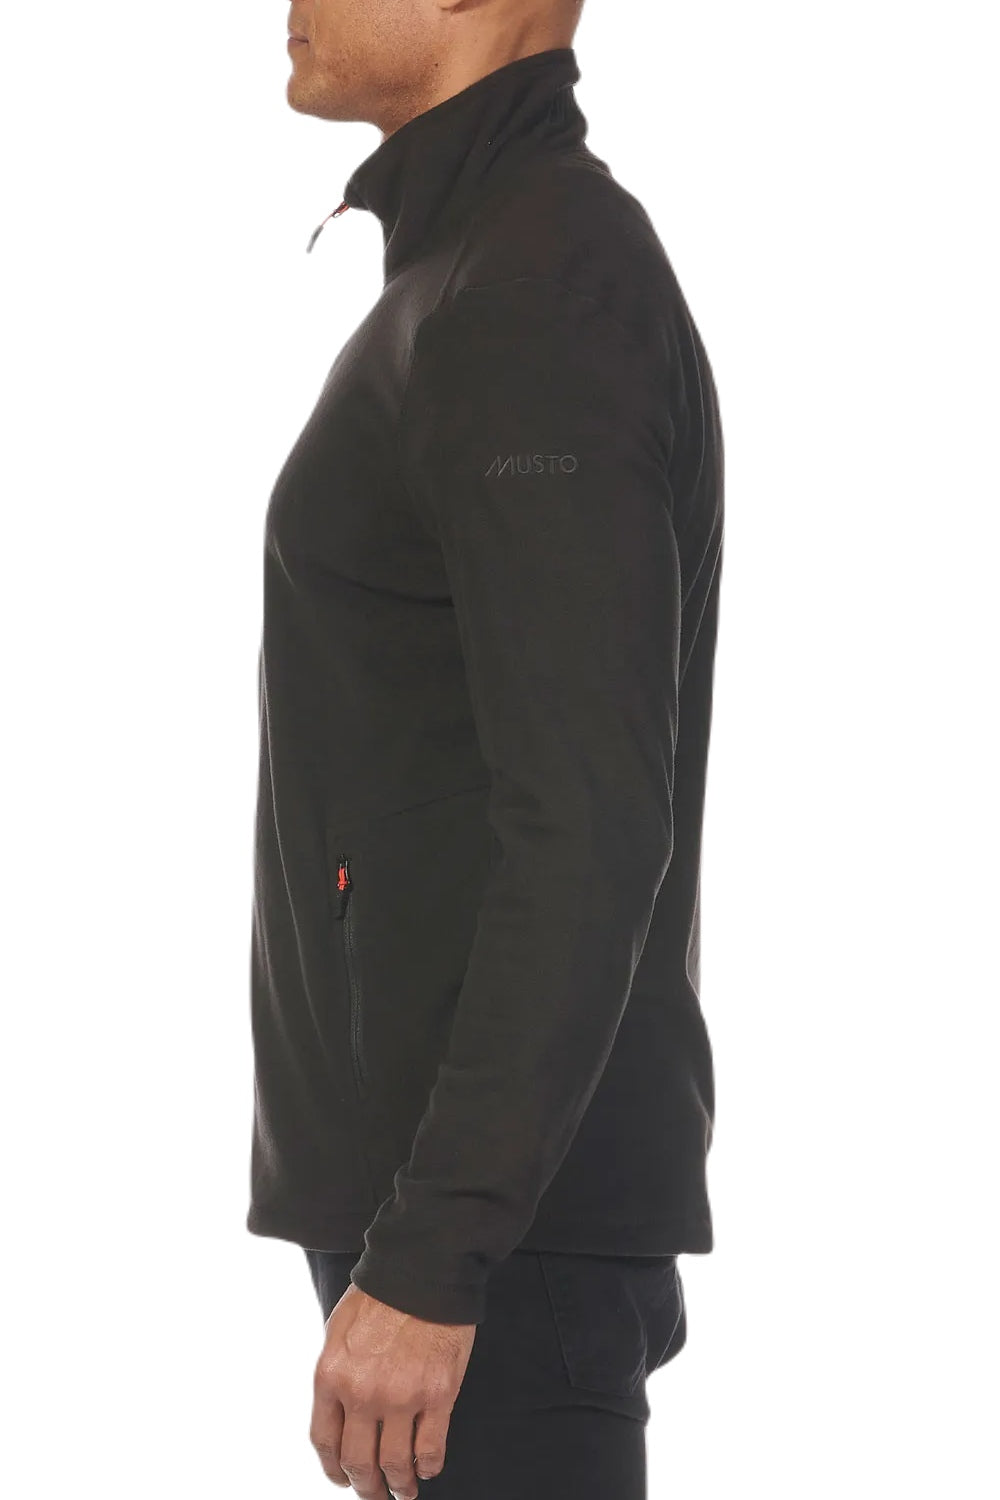 Musto Mens Corsica PolarTec 100gm Fleece 2.0 in Black 